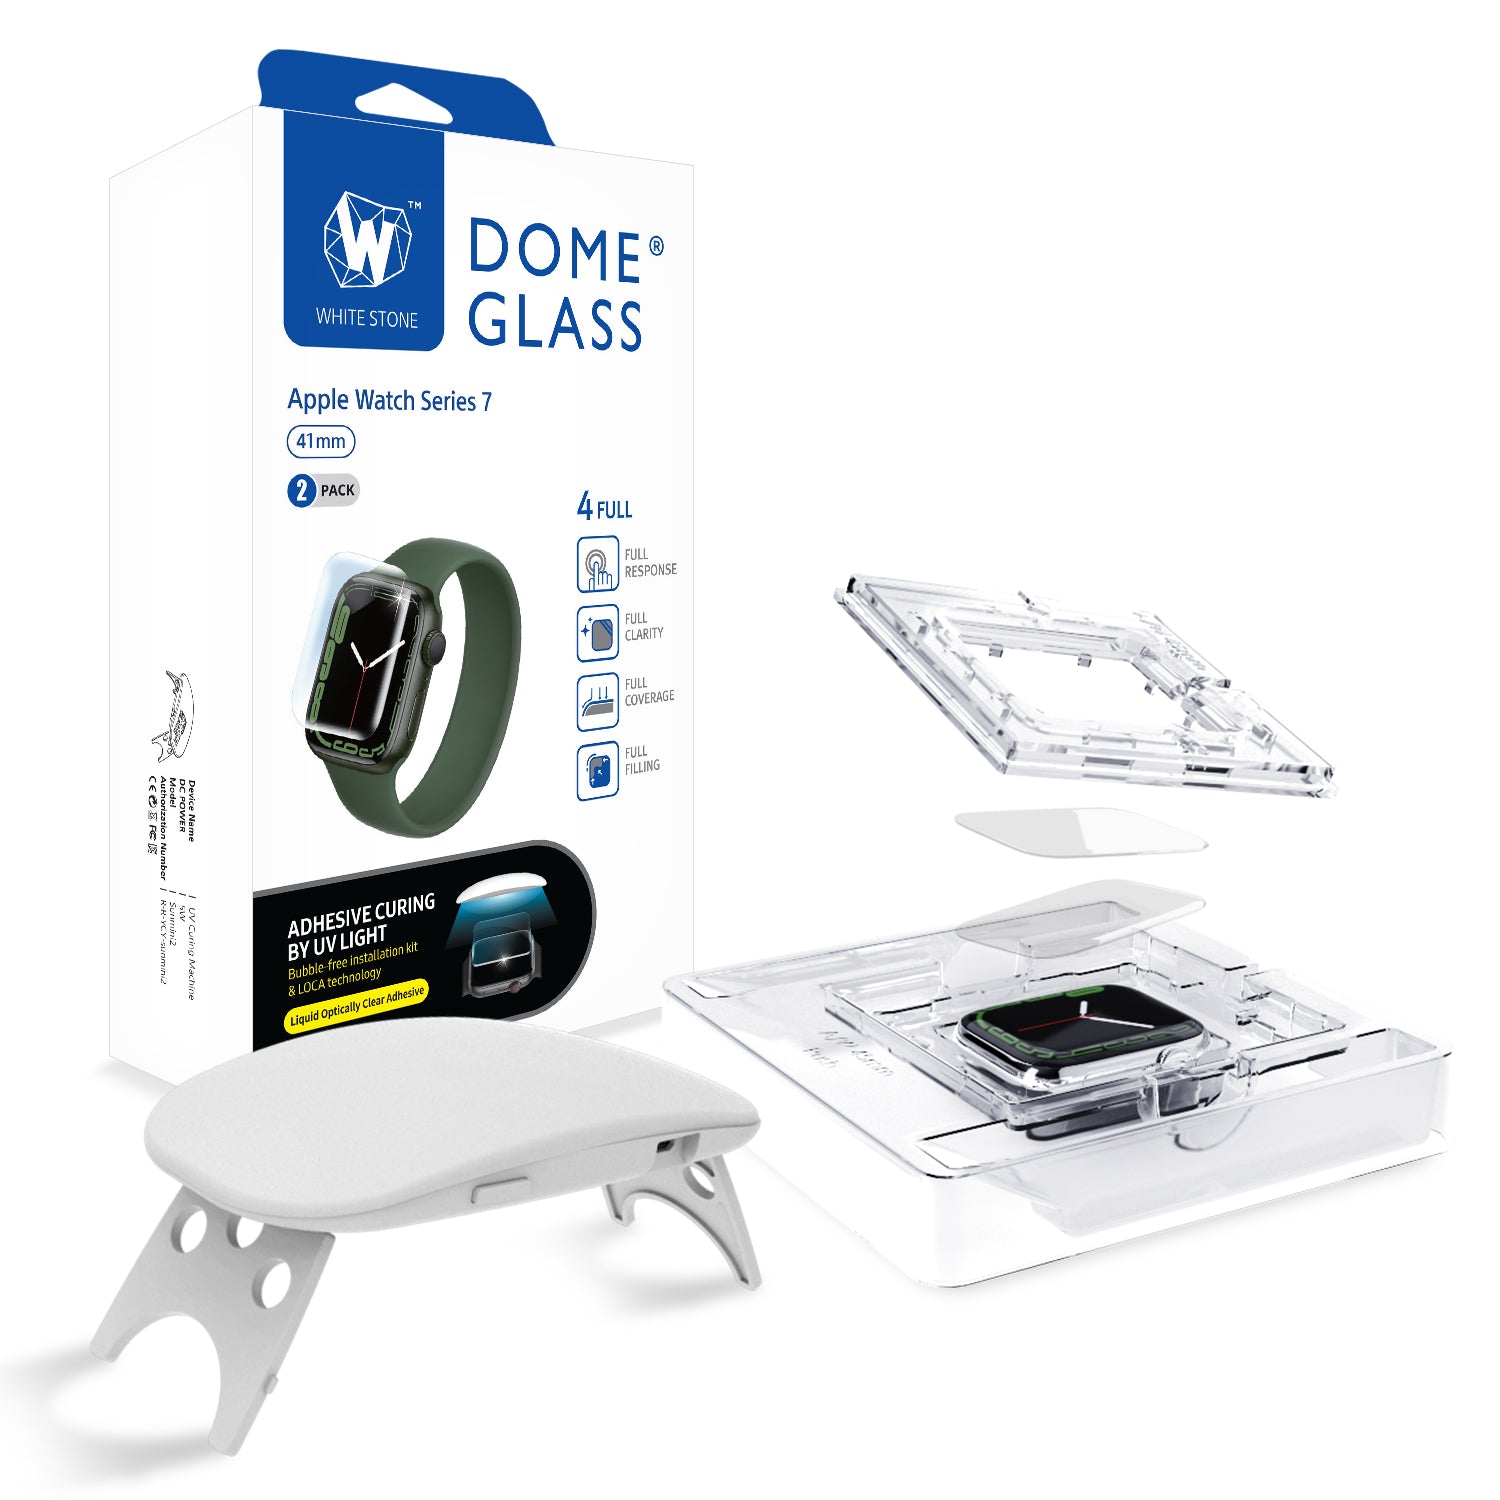 Whitestone Dome Glass (2packs) | Apple Watch Series 7 41mm